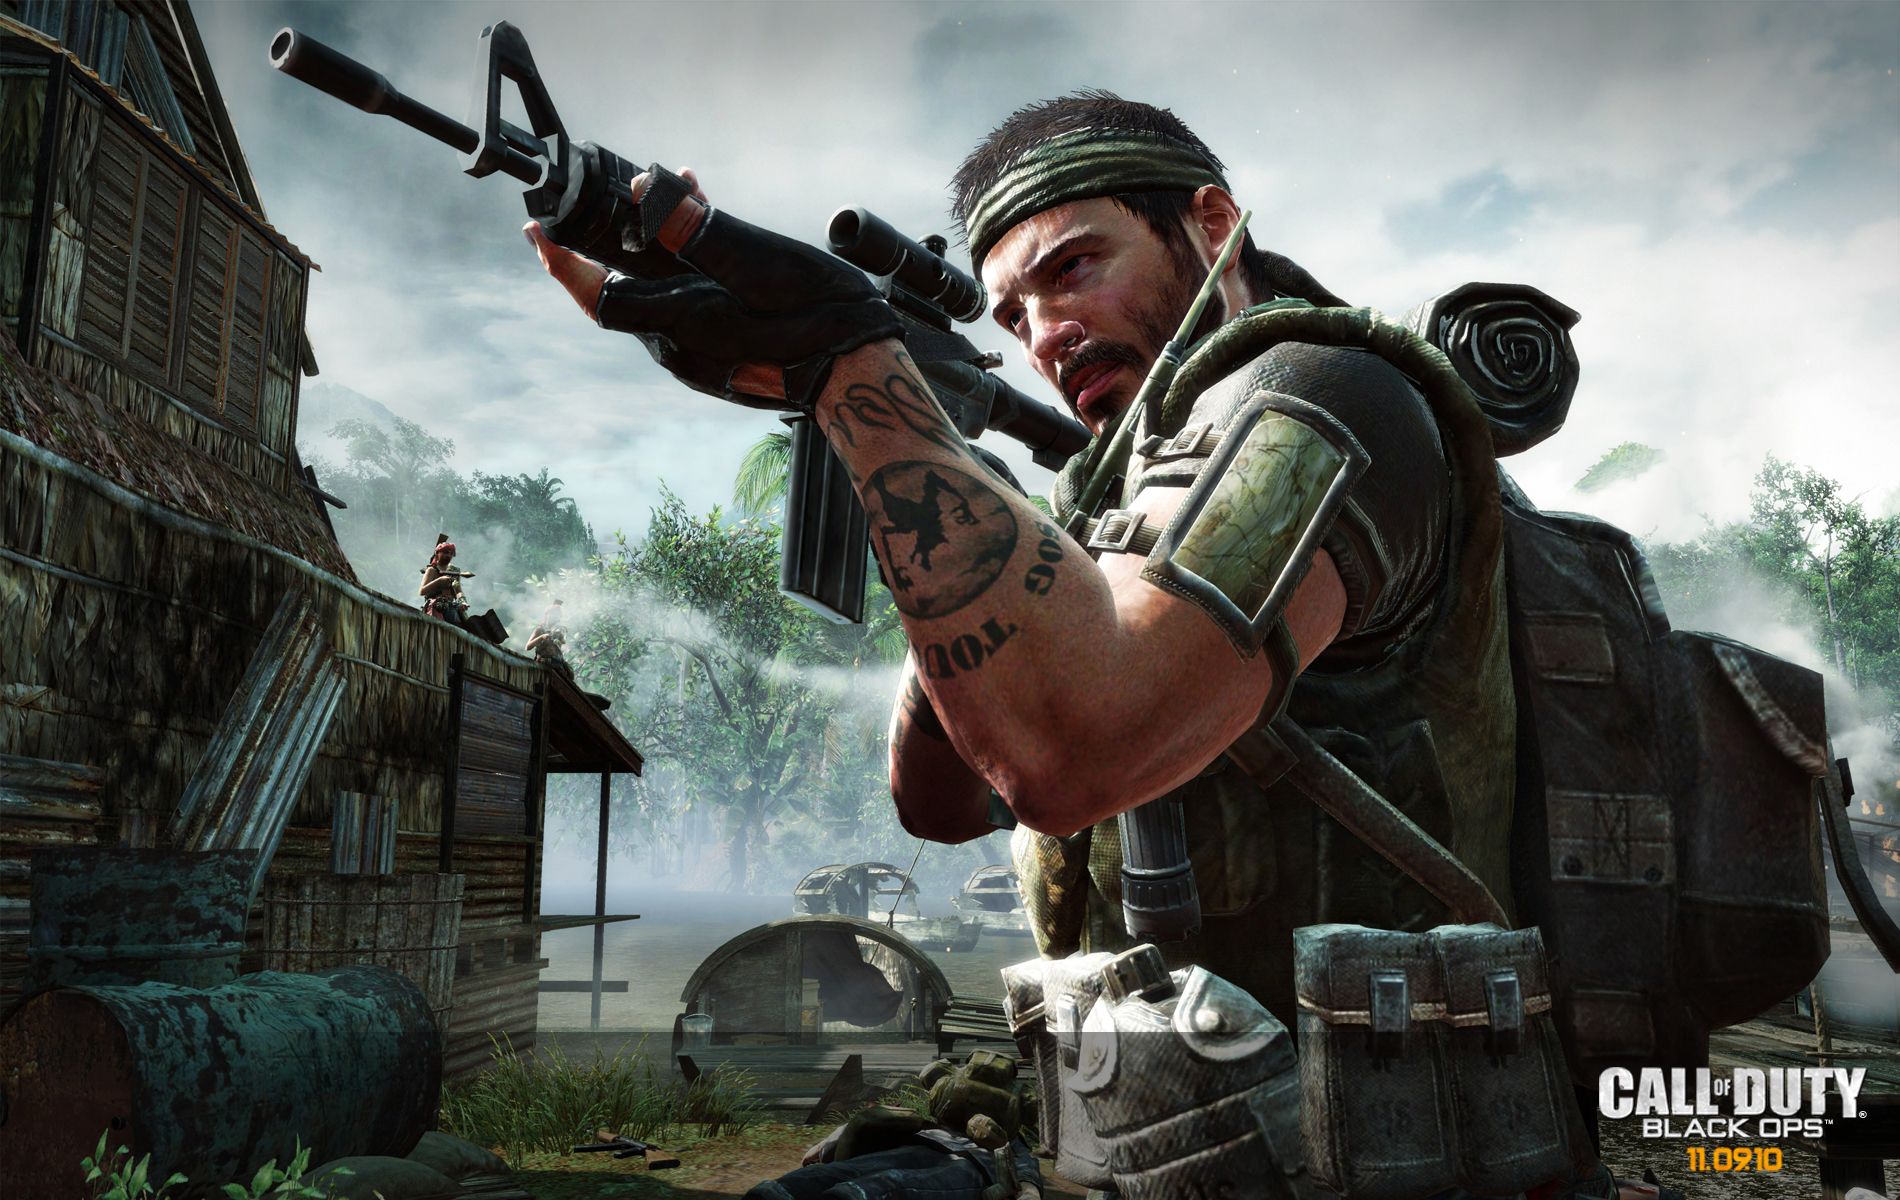 Official Call of Duty Black Ops Wallpaper. Call of duty, Black ops, Tatuajes de miedo